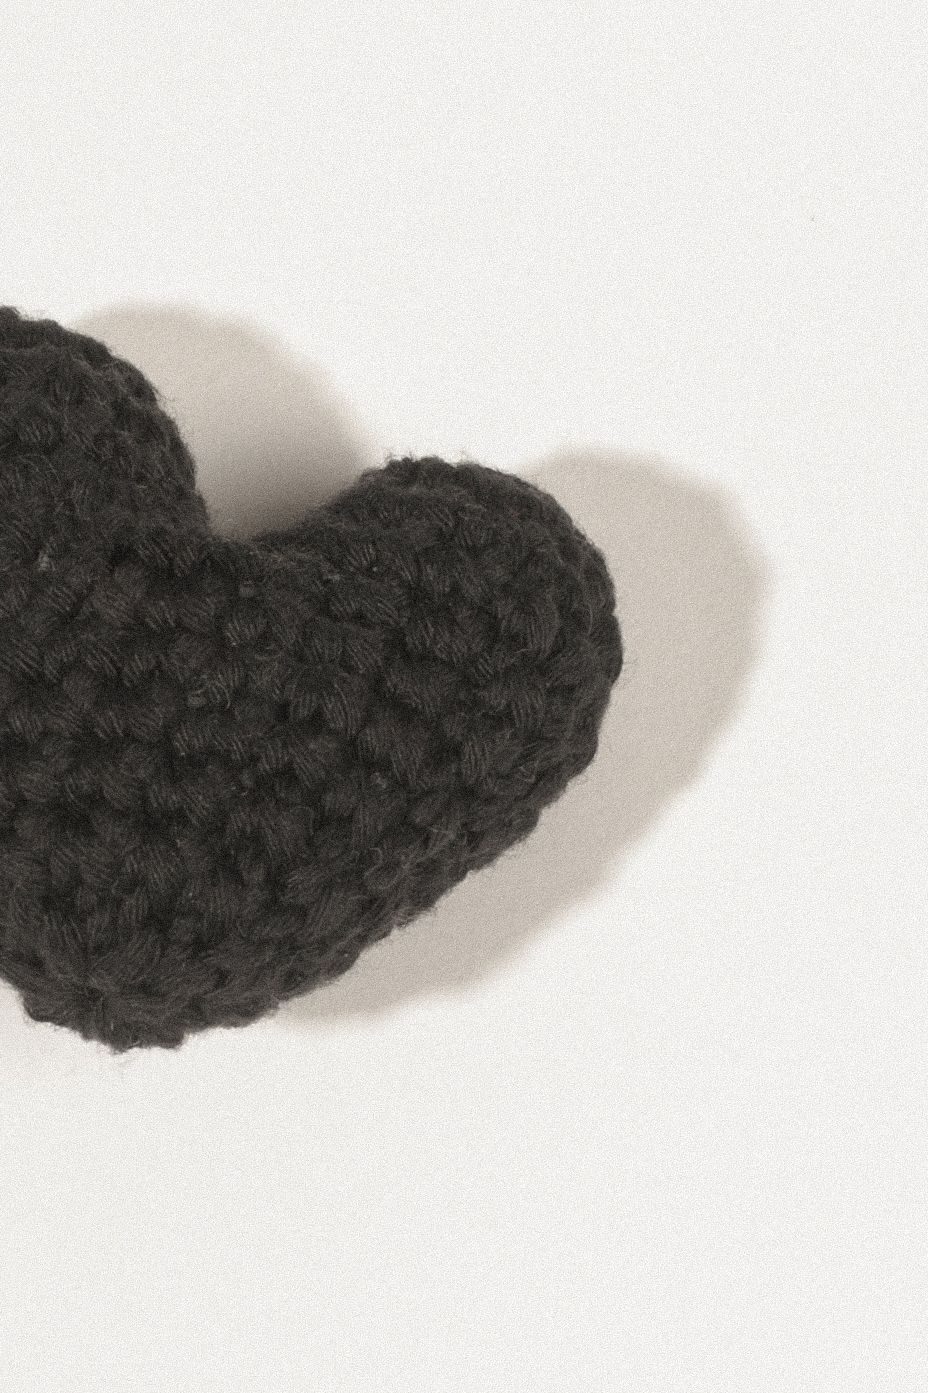  Black Heart Crochet Pin 